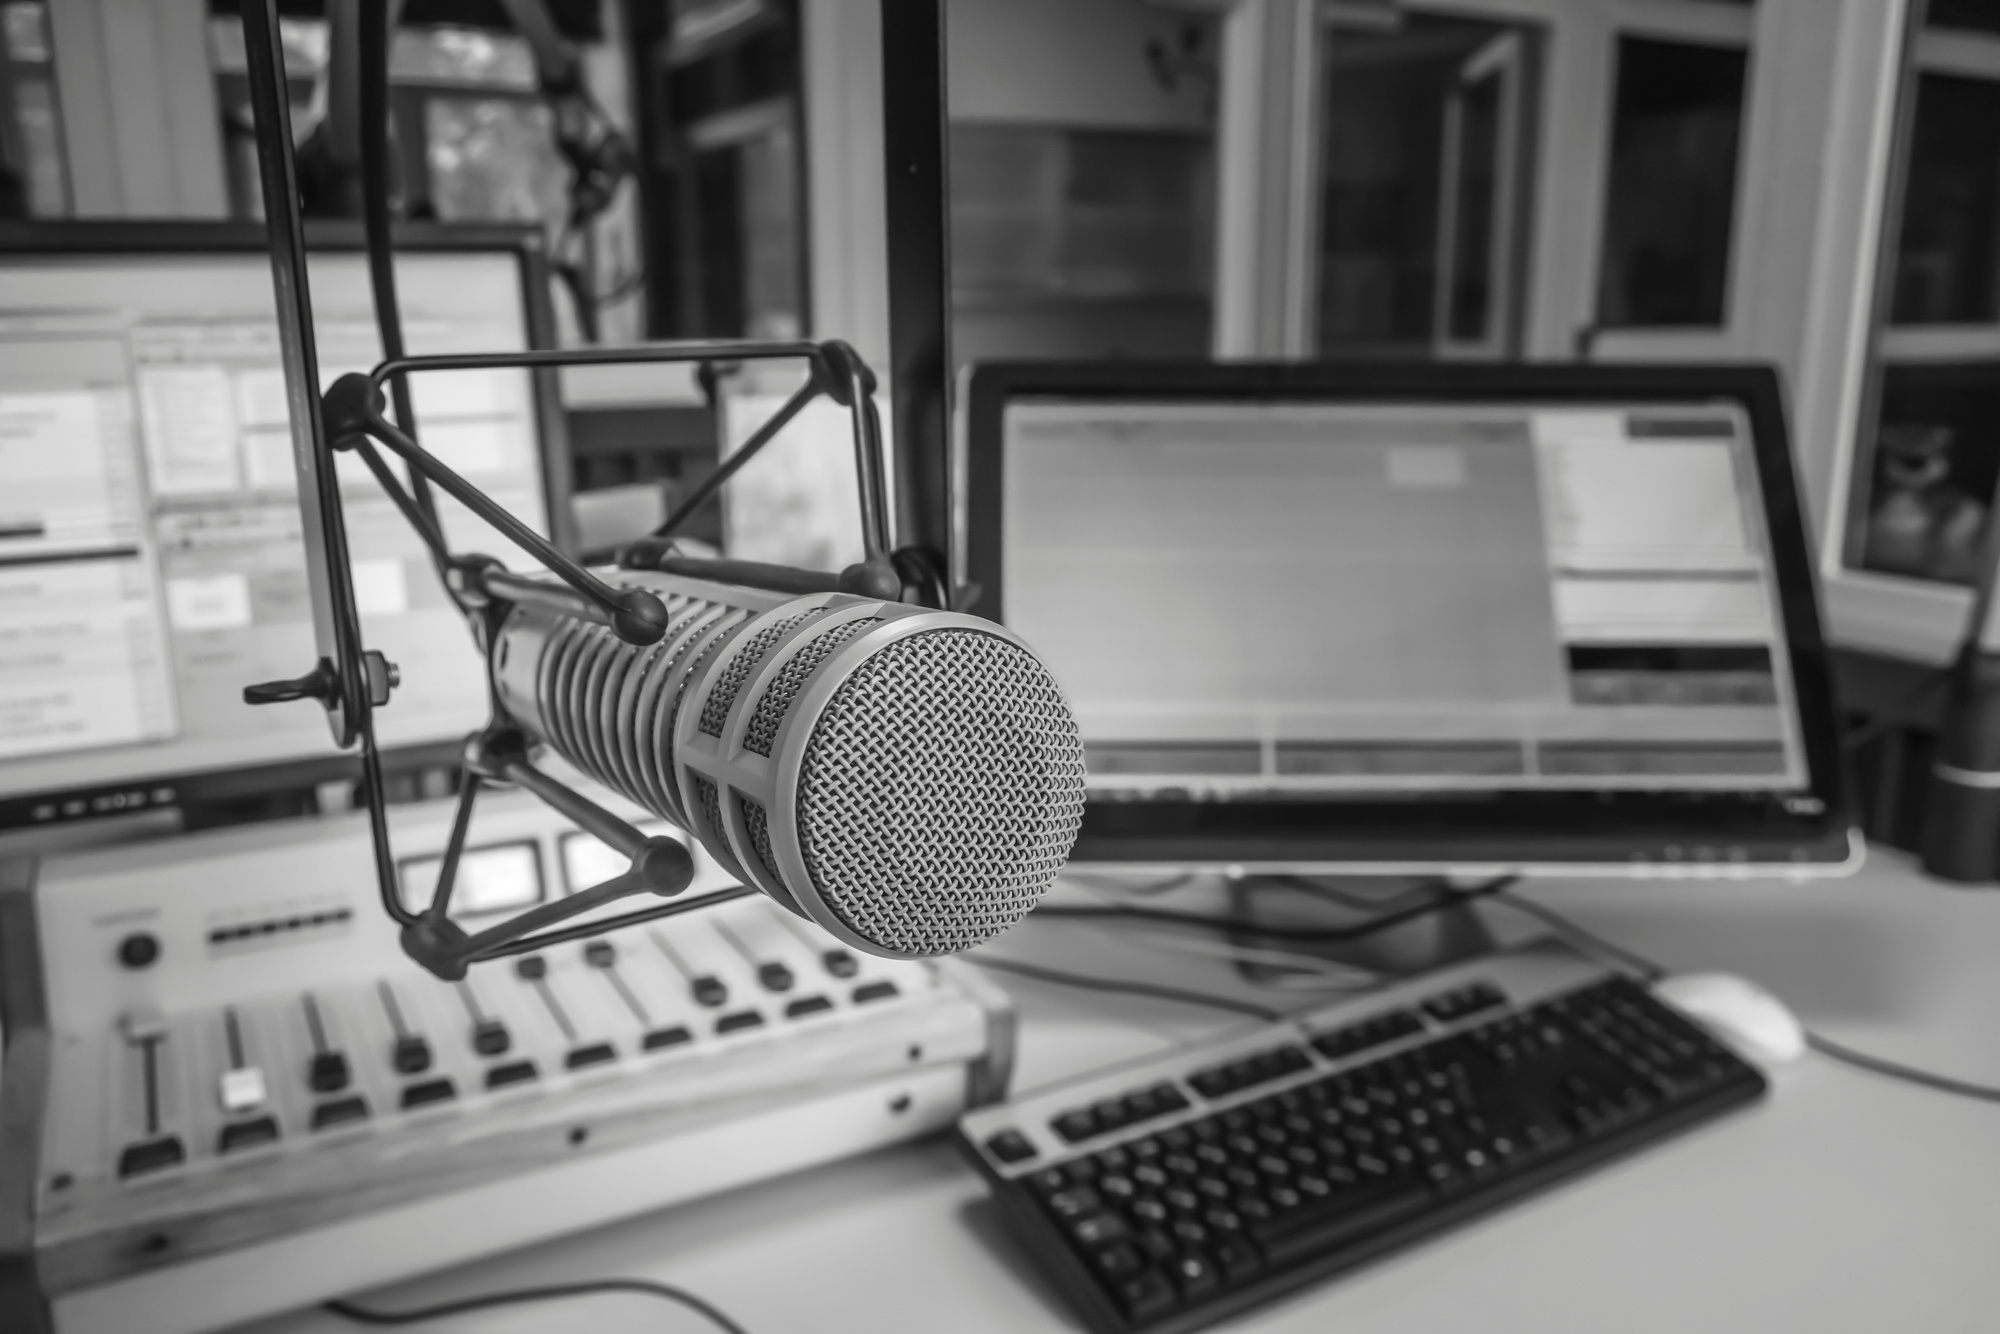 Radio station studio